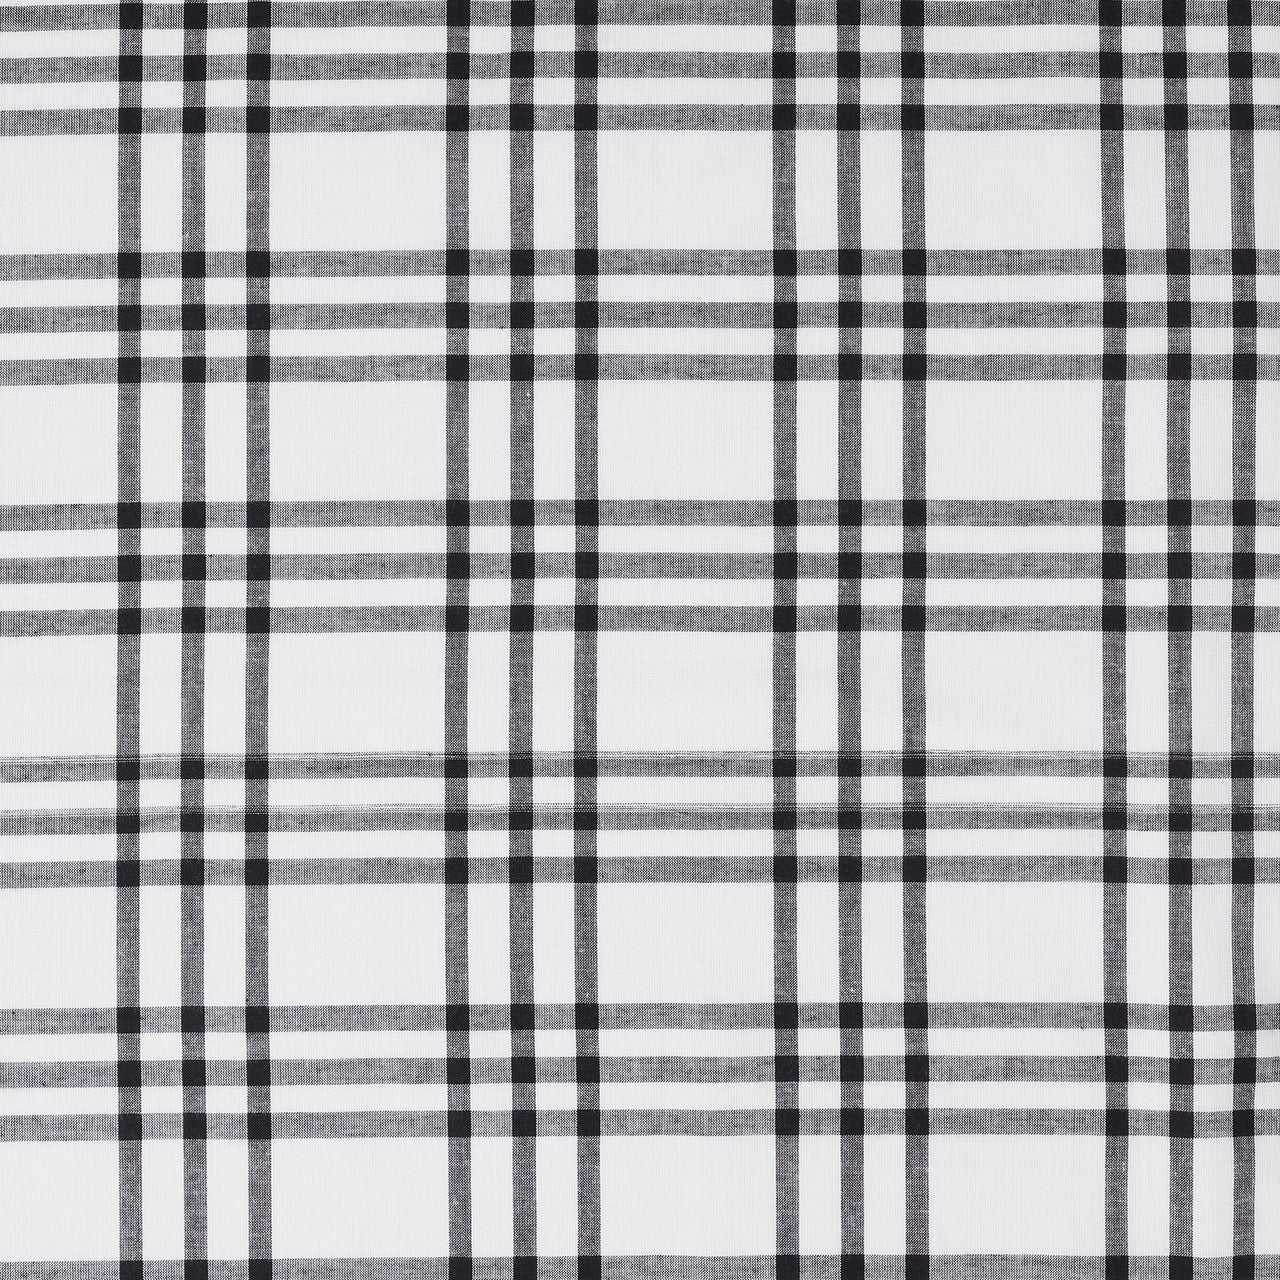 Sawyer Mill Black Plaid Prairie Swag Curtain Set of 2 36x36x18 VHC Brands